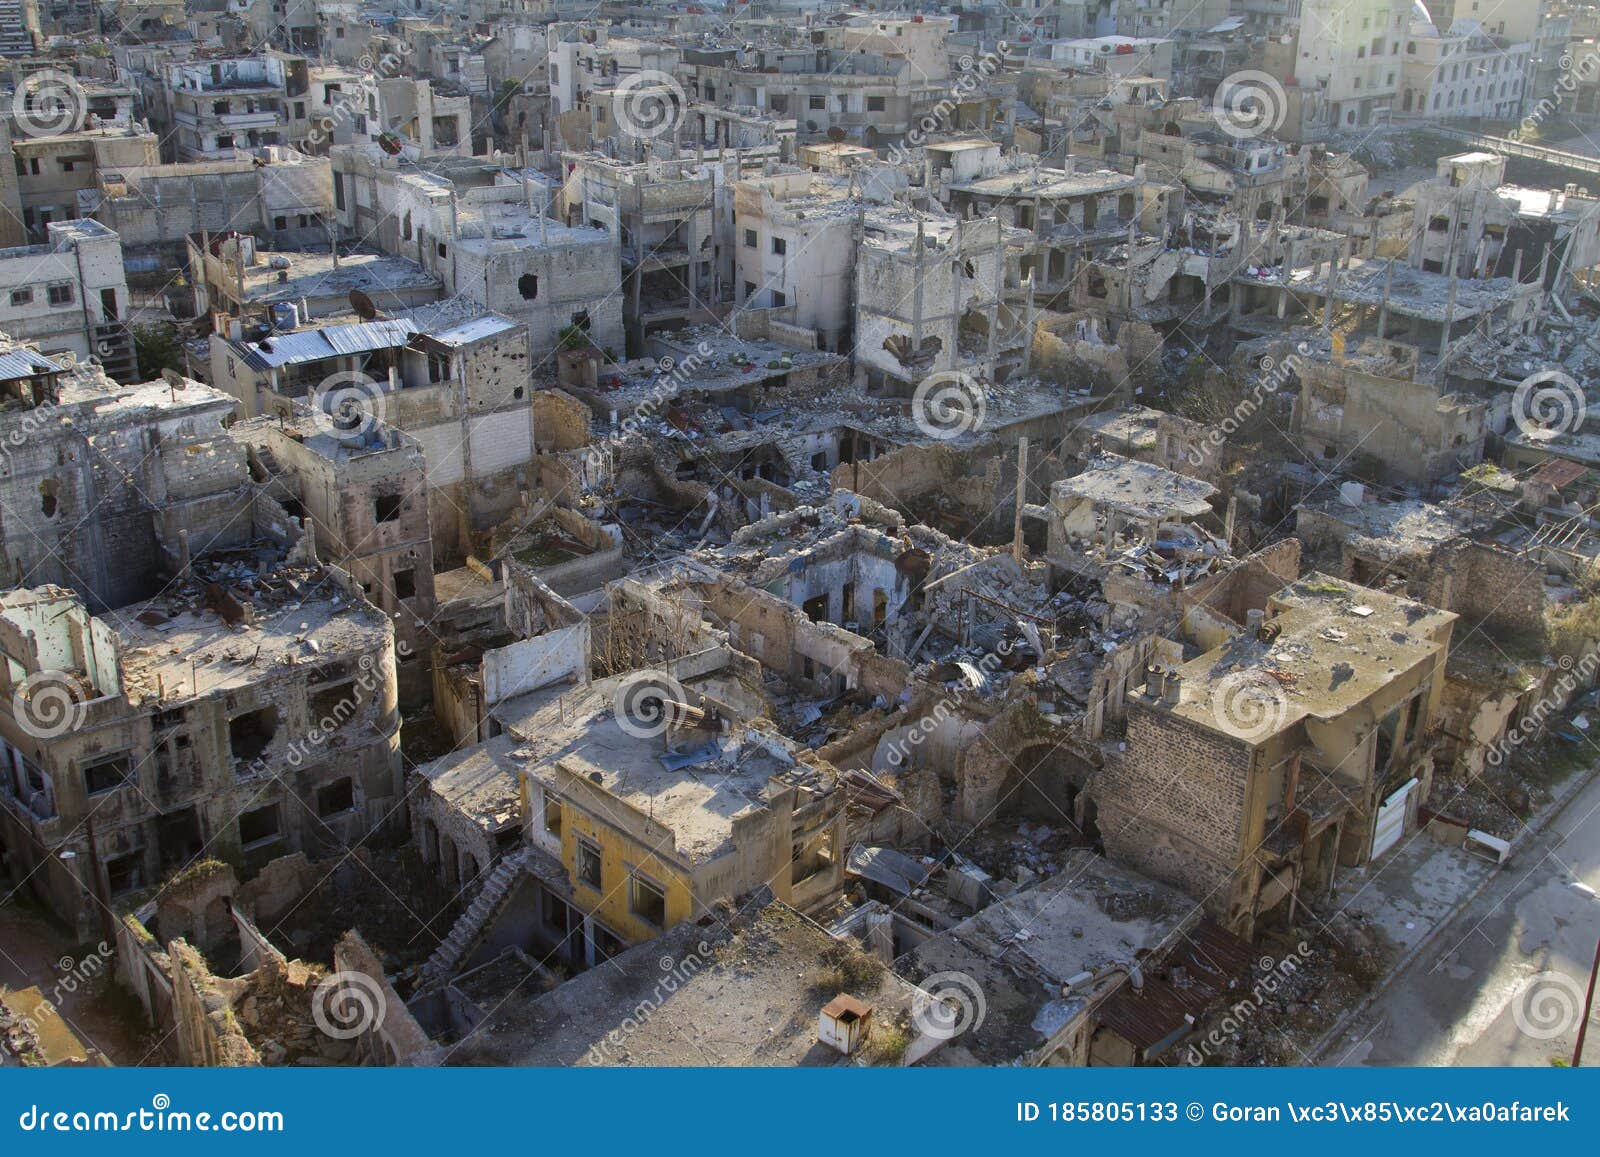 destroyed homs centre, syria